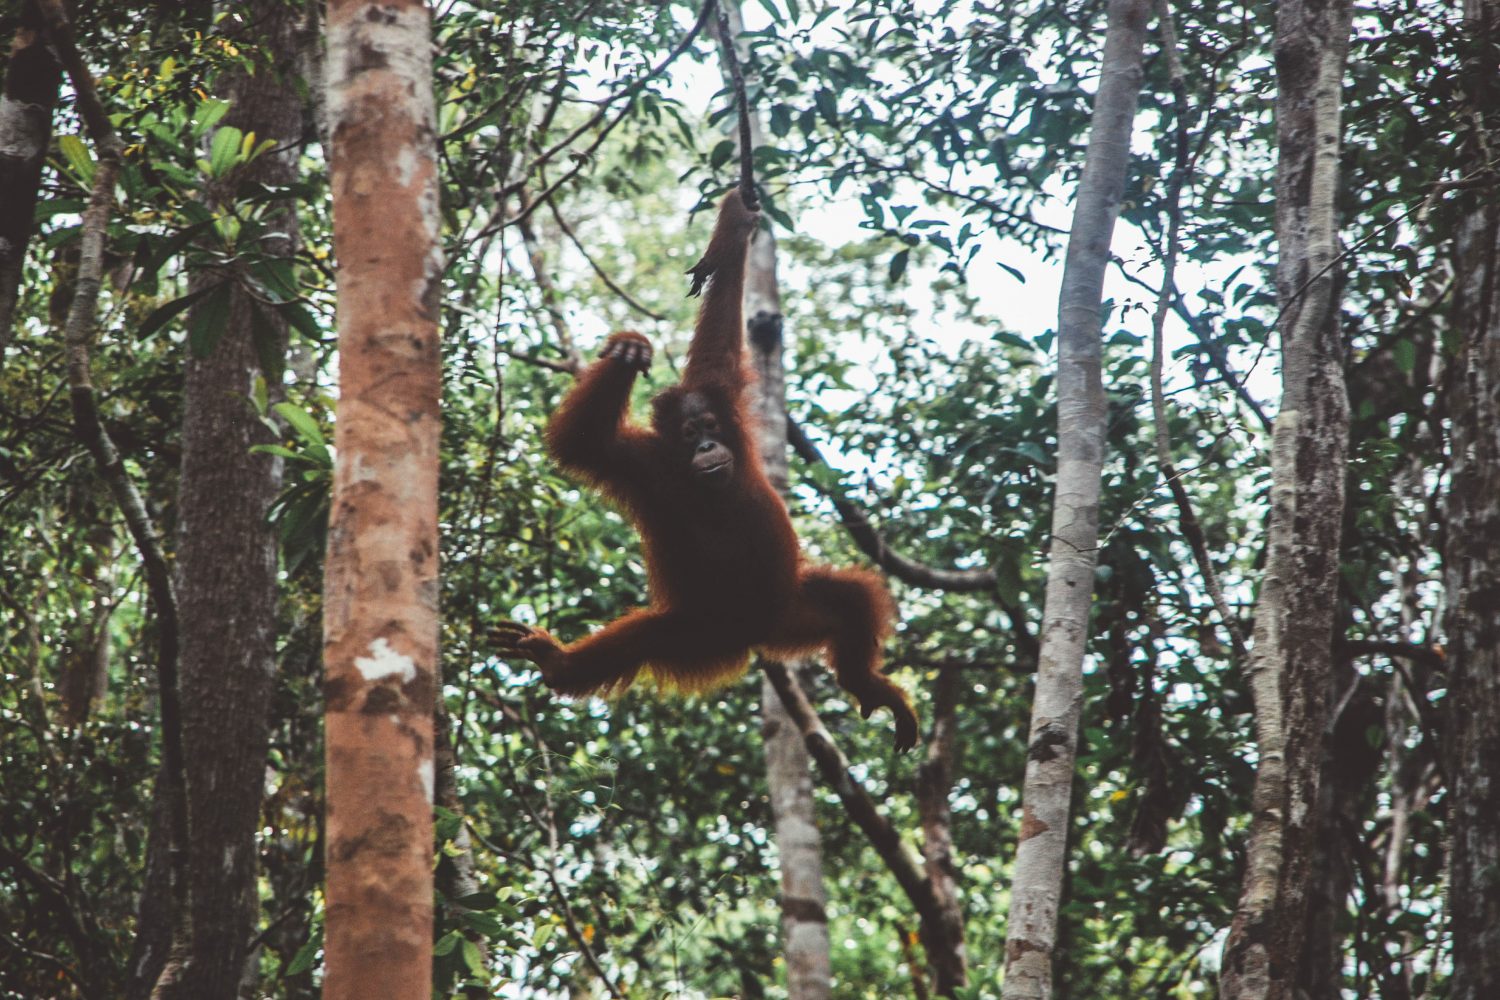 borneo orangutan tour